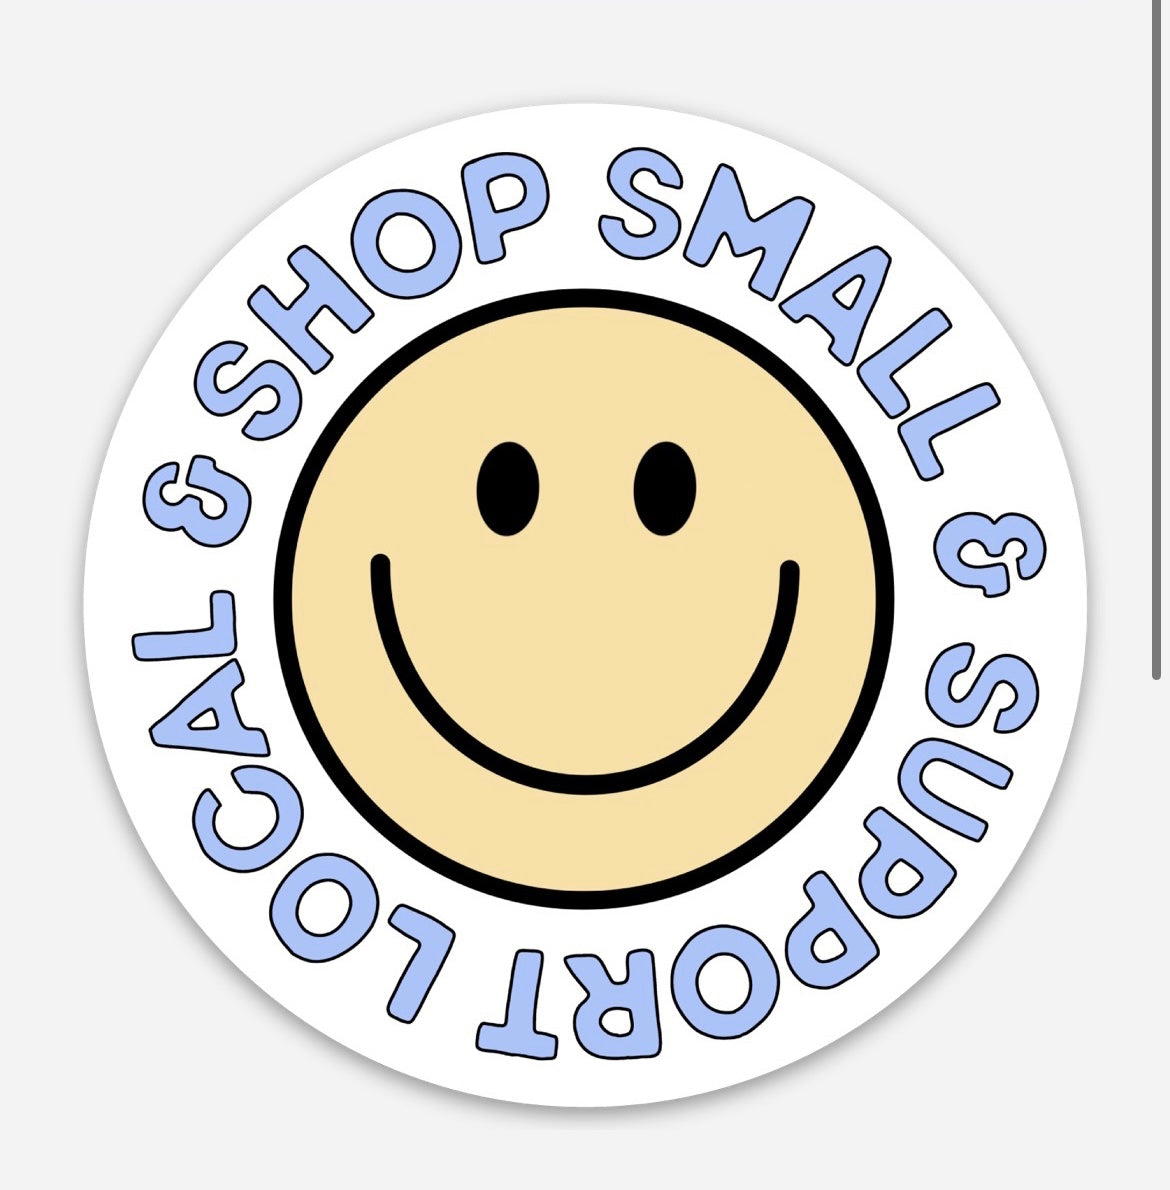 Shop Small & Support Local Sticker